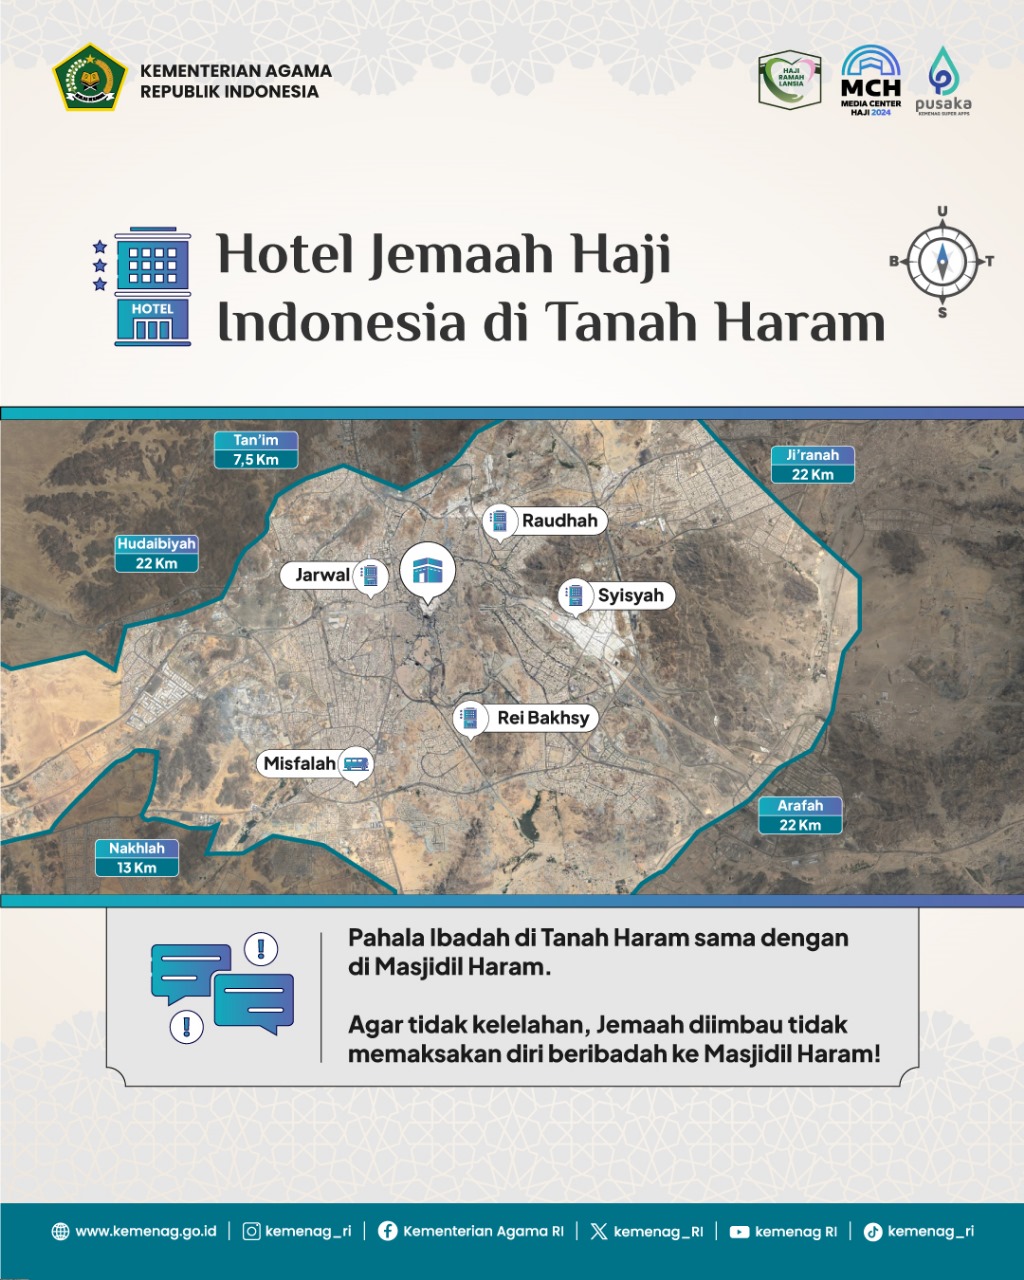 Jemaah Haji Diimbau Laksanakan Umrah setelah Cukup Beristirahat